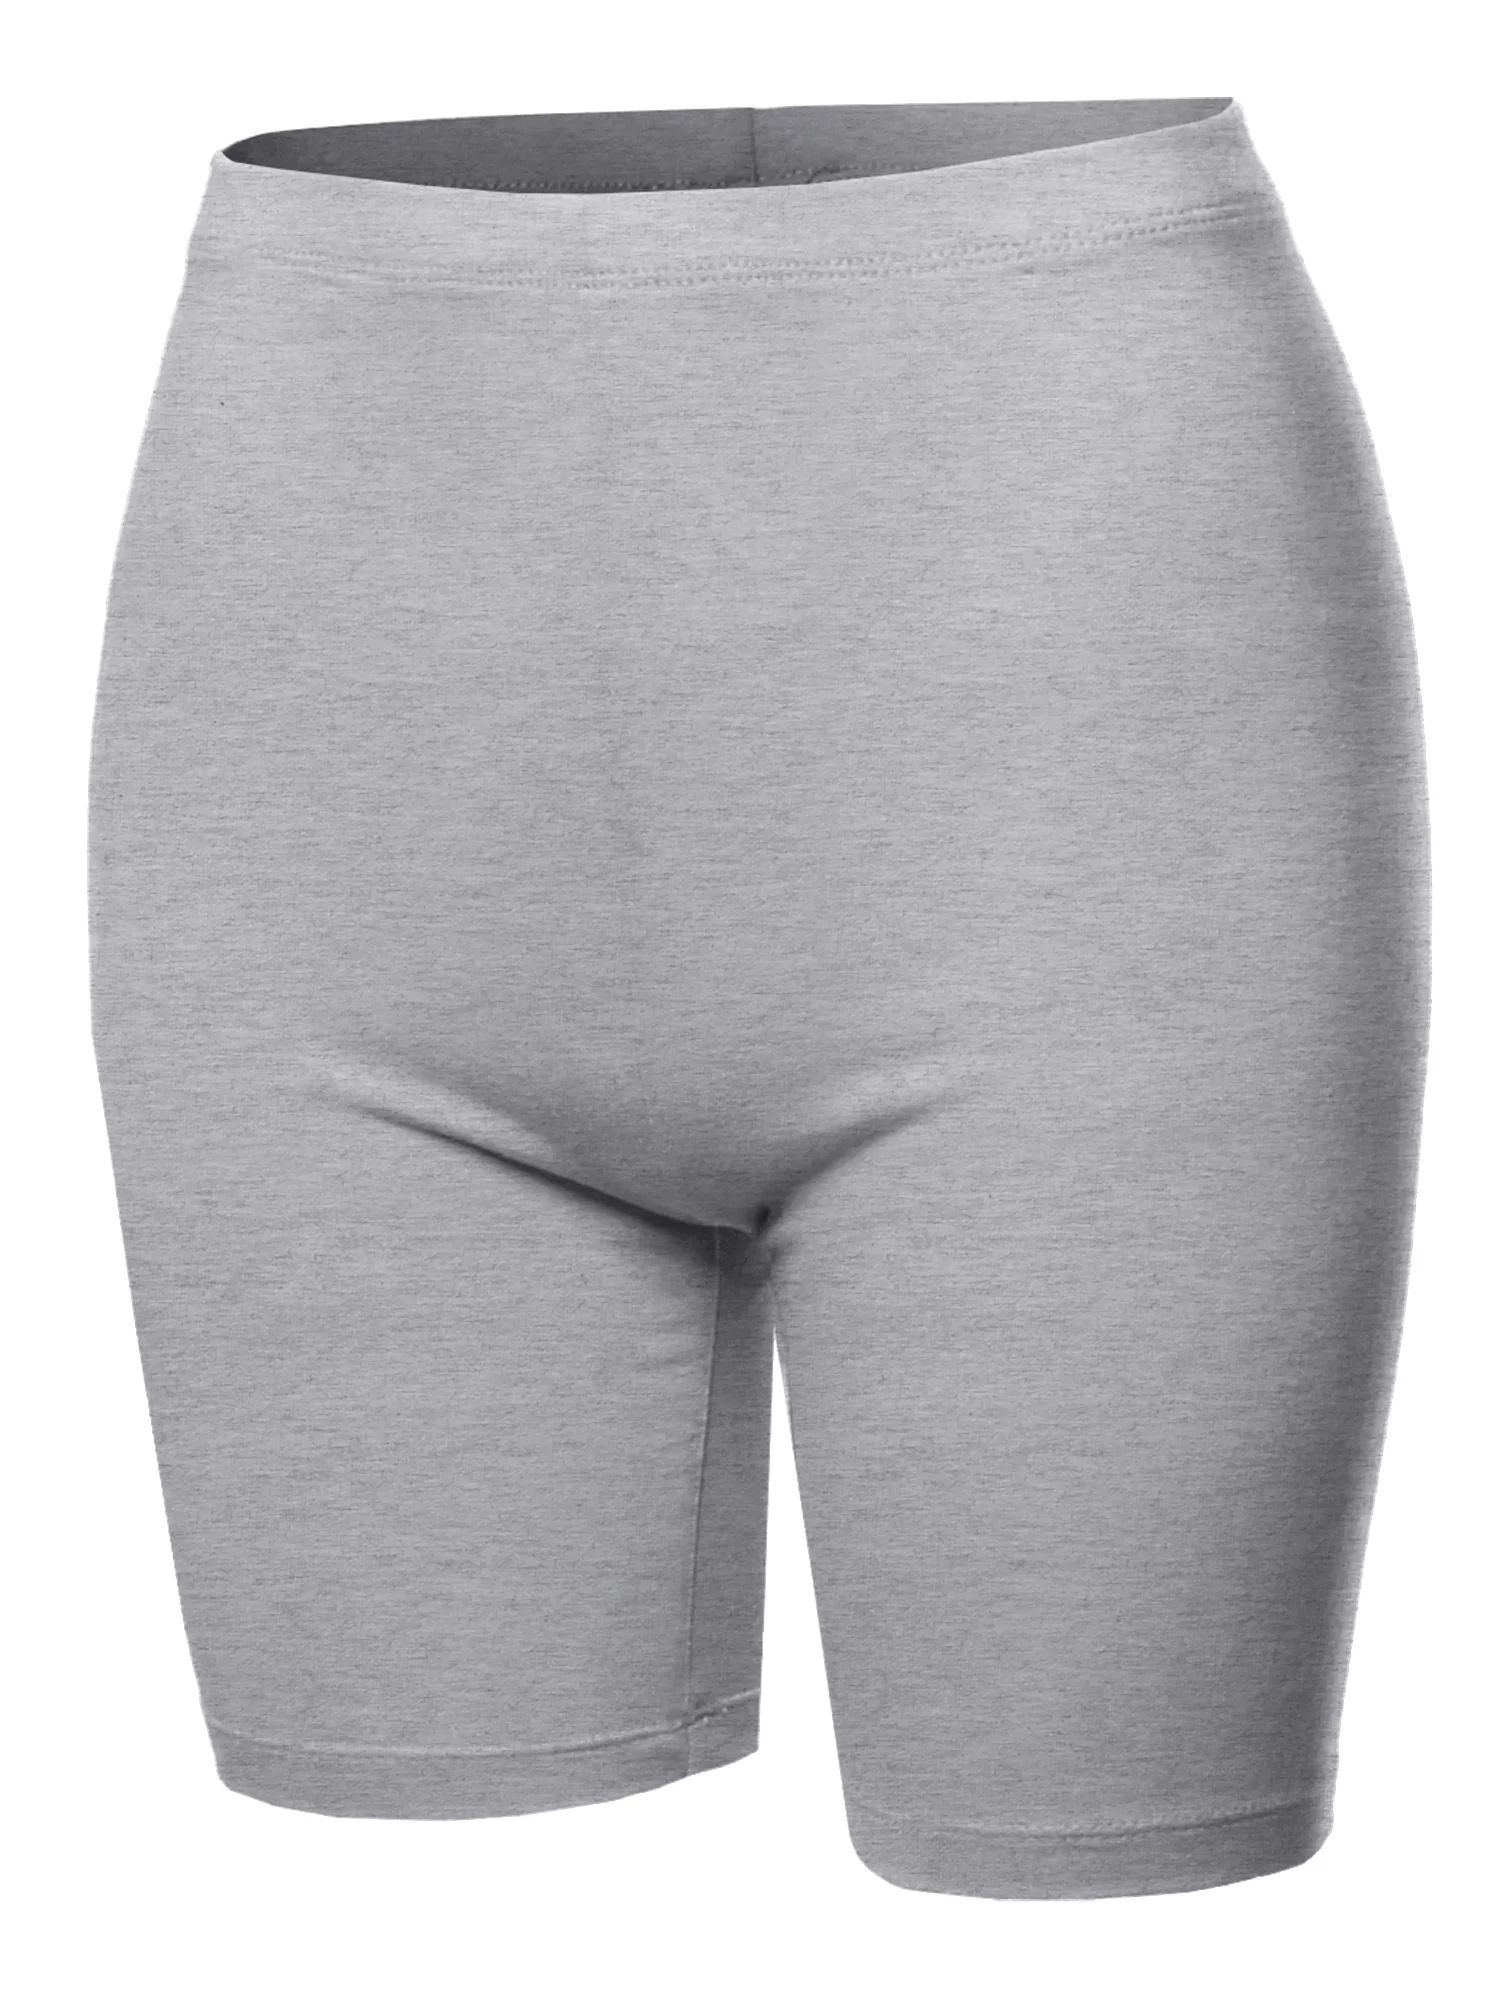 A2Y Women's Basic Solid Premium Cotton Mid Thigh High Rise Biker Bermuda Shorts Heather Grey M - ... | Walmart (US)